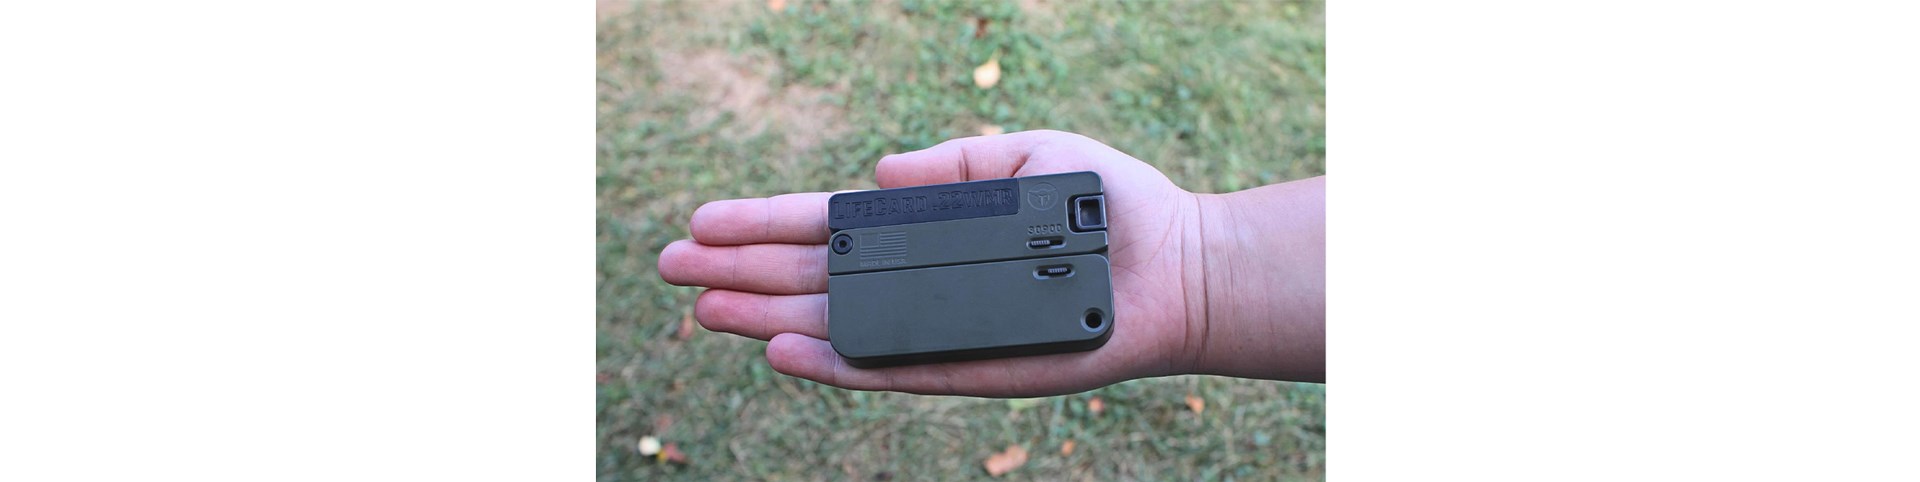 small folding gun in hand outdoors